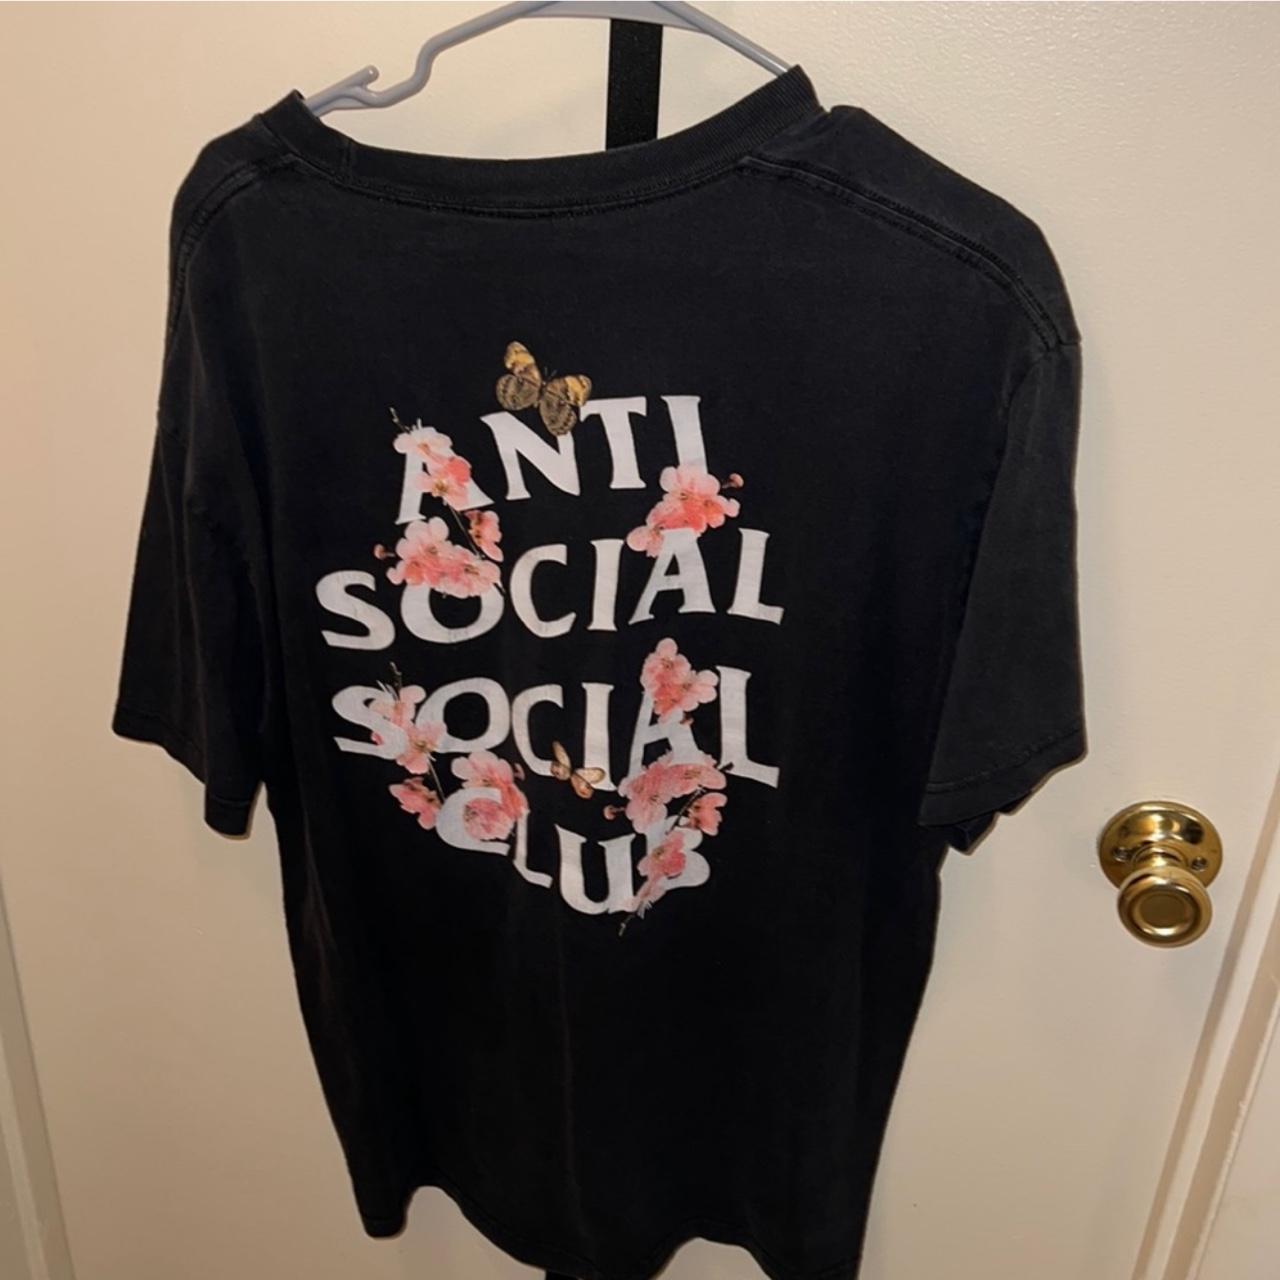 Anti Social Social Club Men's Black T-shirt